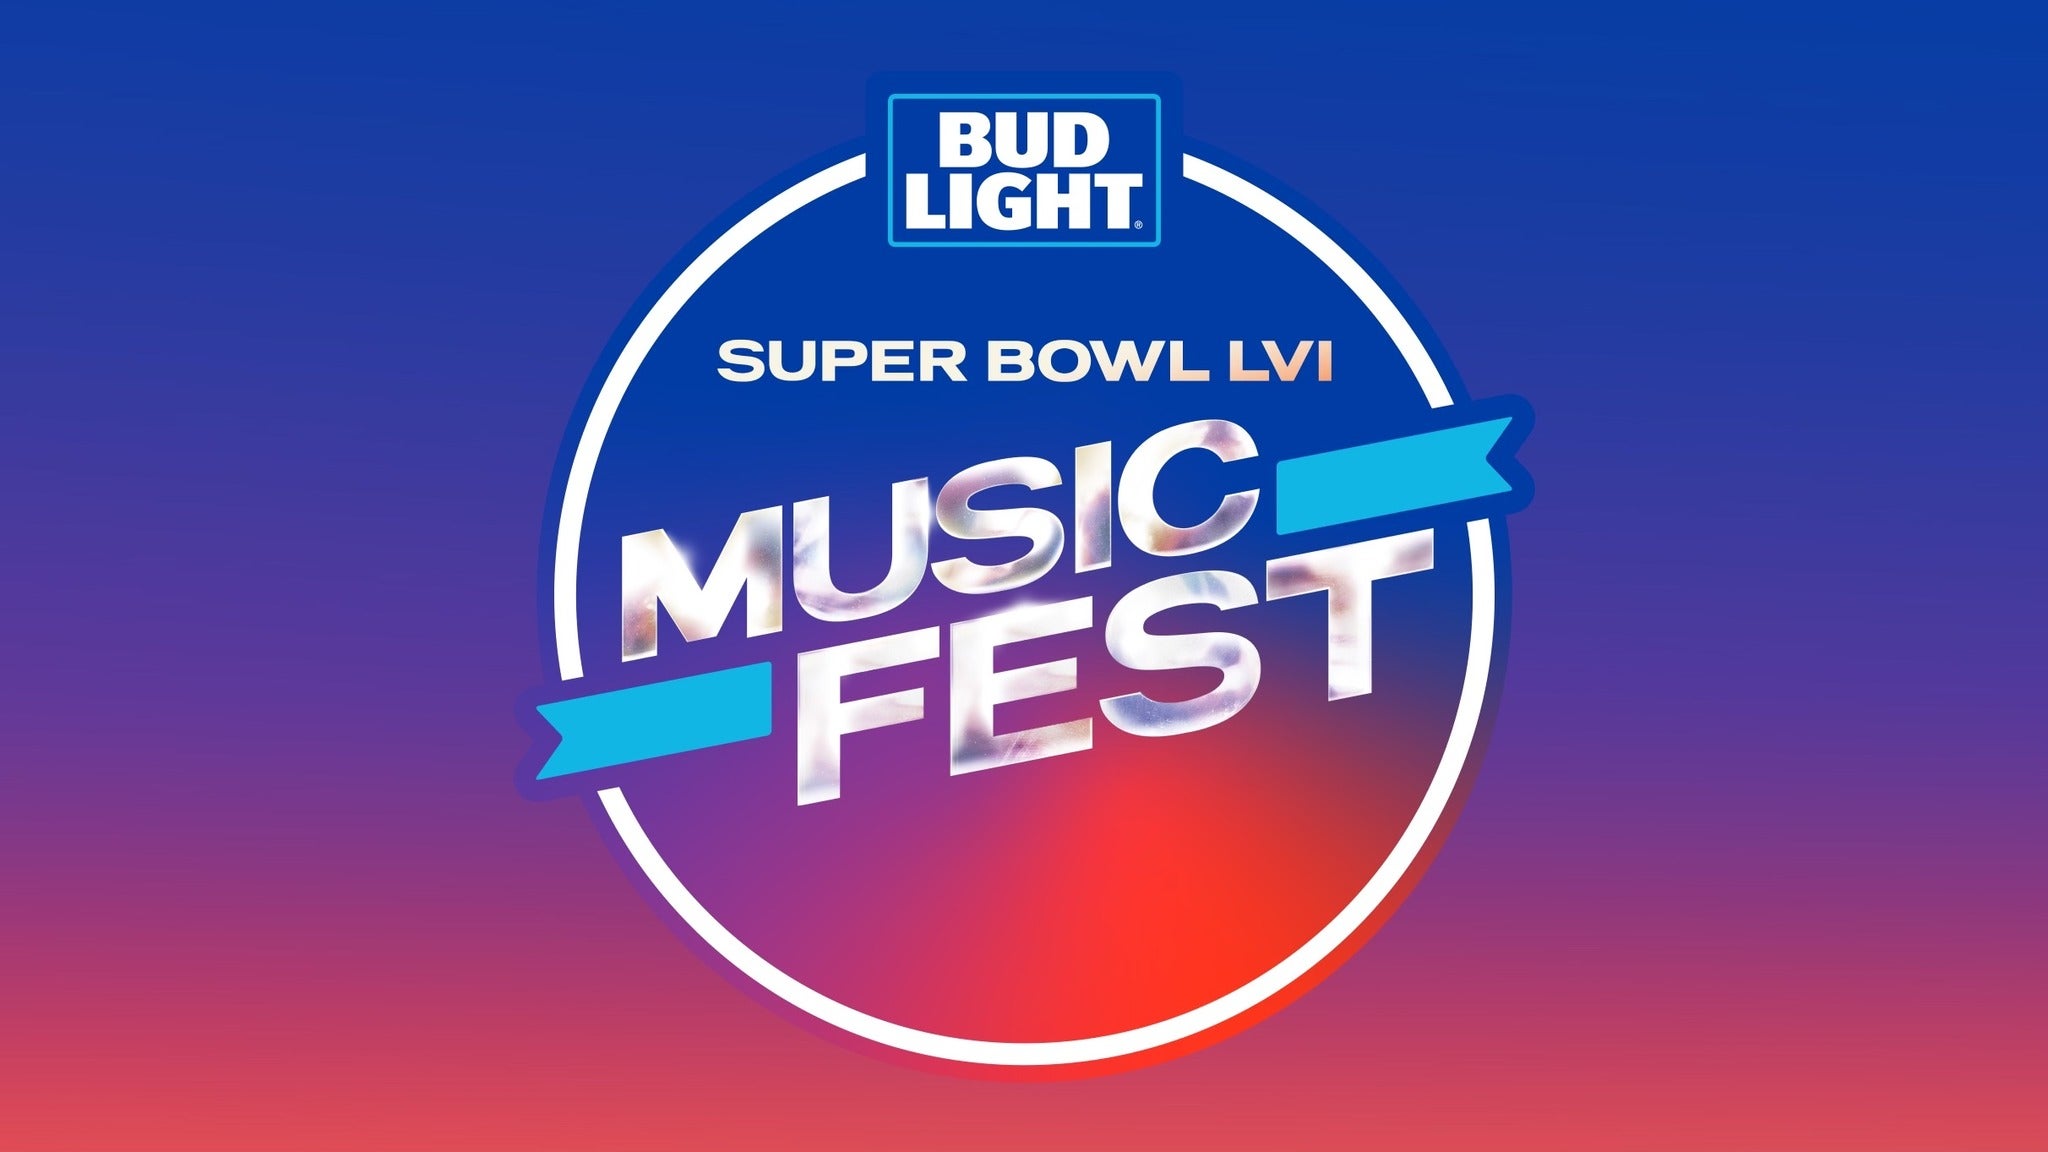 Bud Light Super Bowl Music Fest: Halsey/Machine Gun Kelly in Los Angeles promo photo for 3 12pm presale offer code